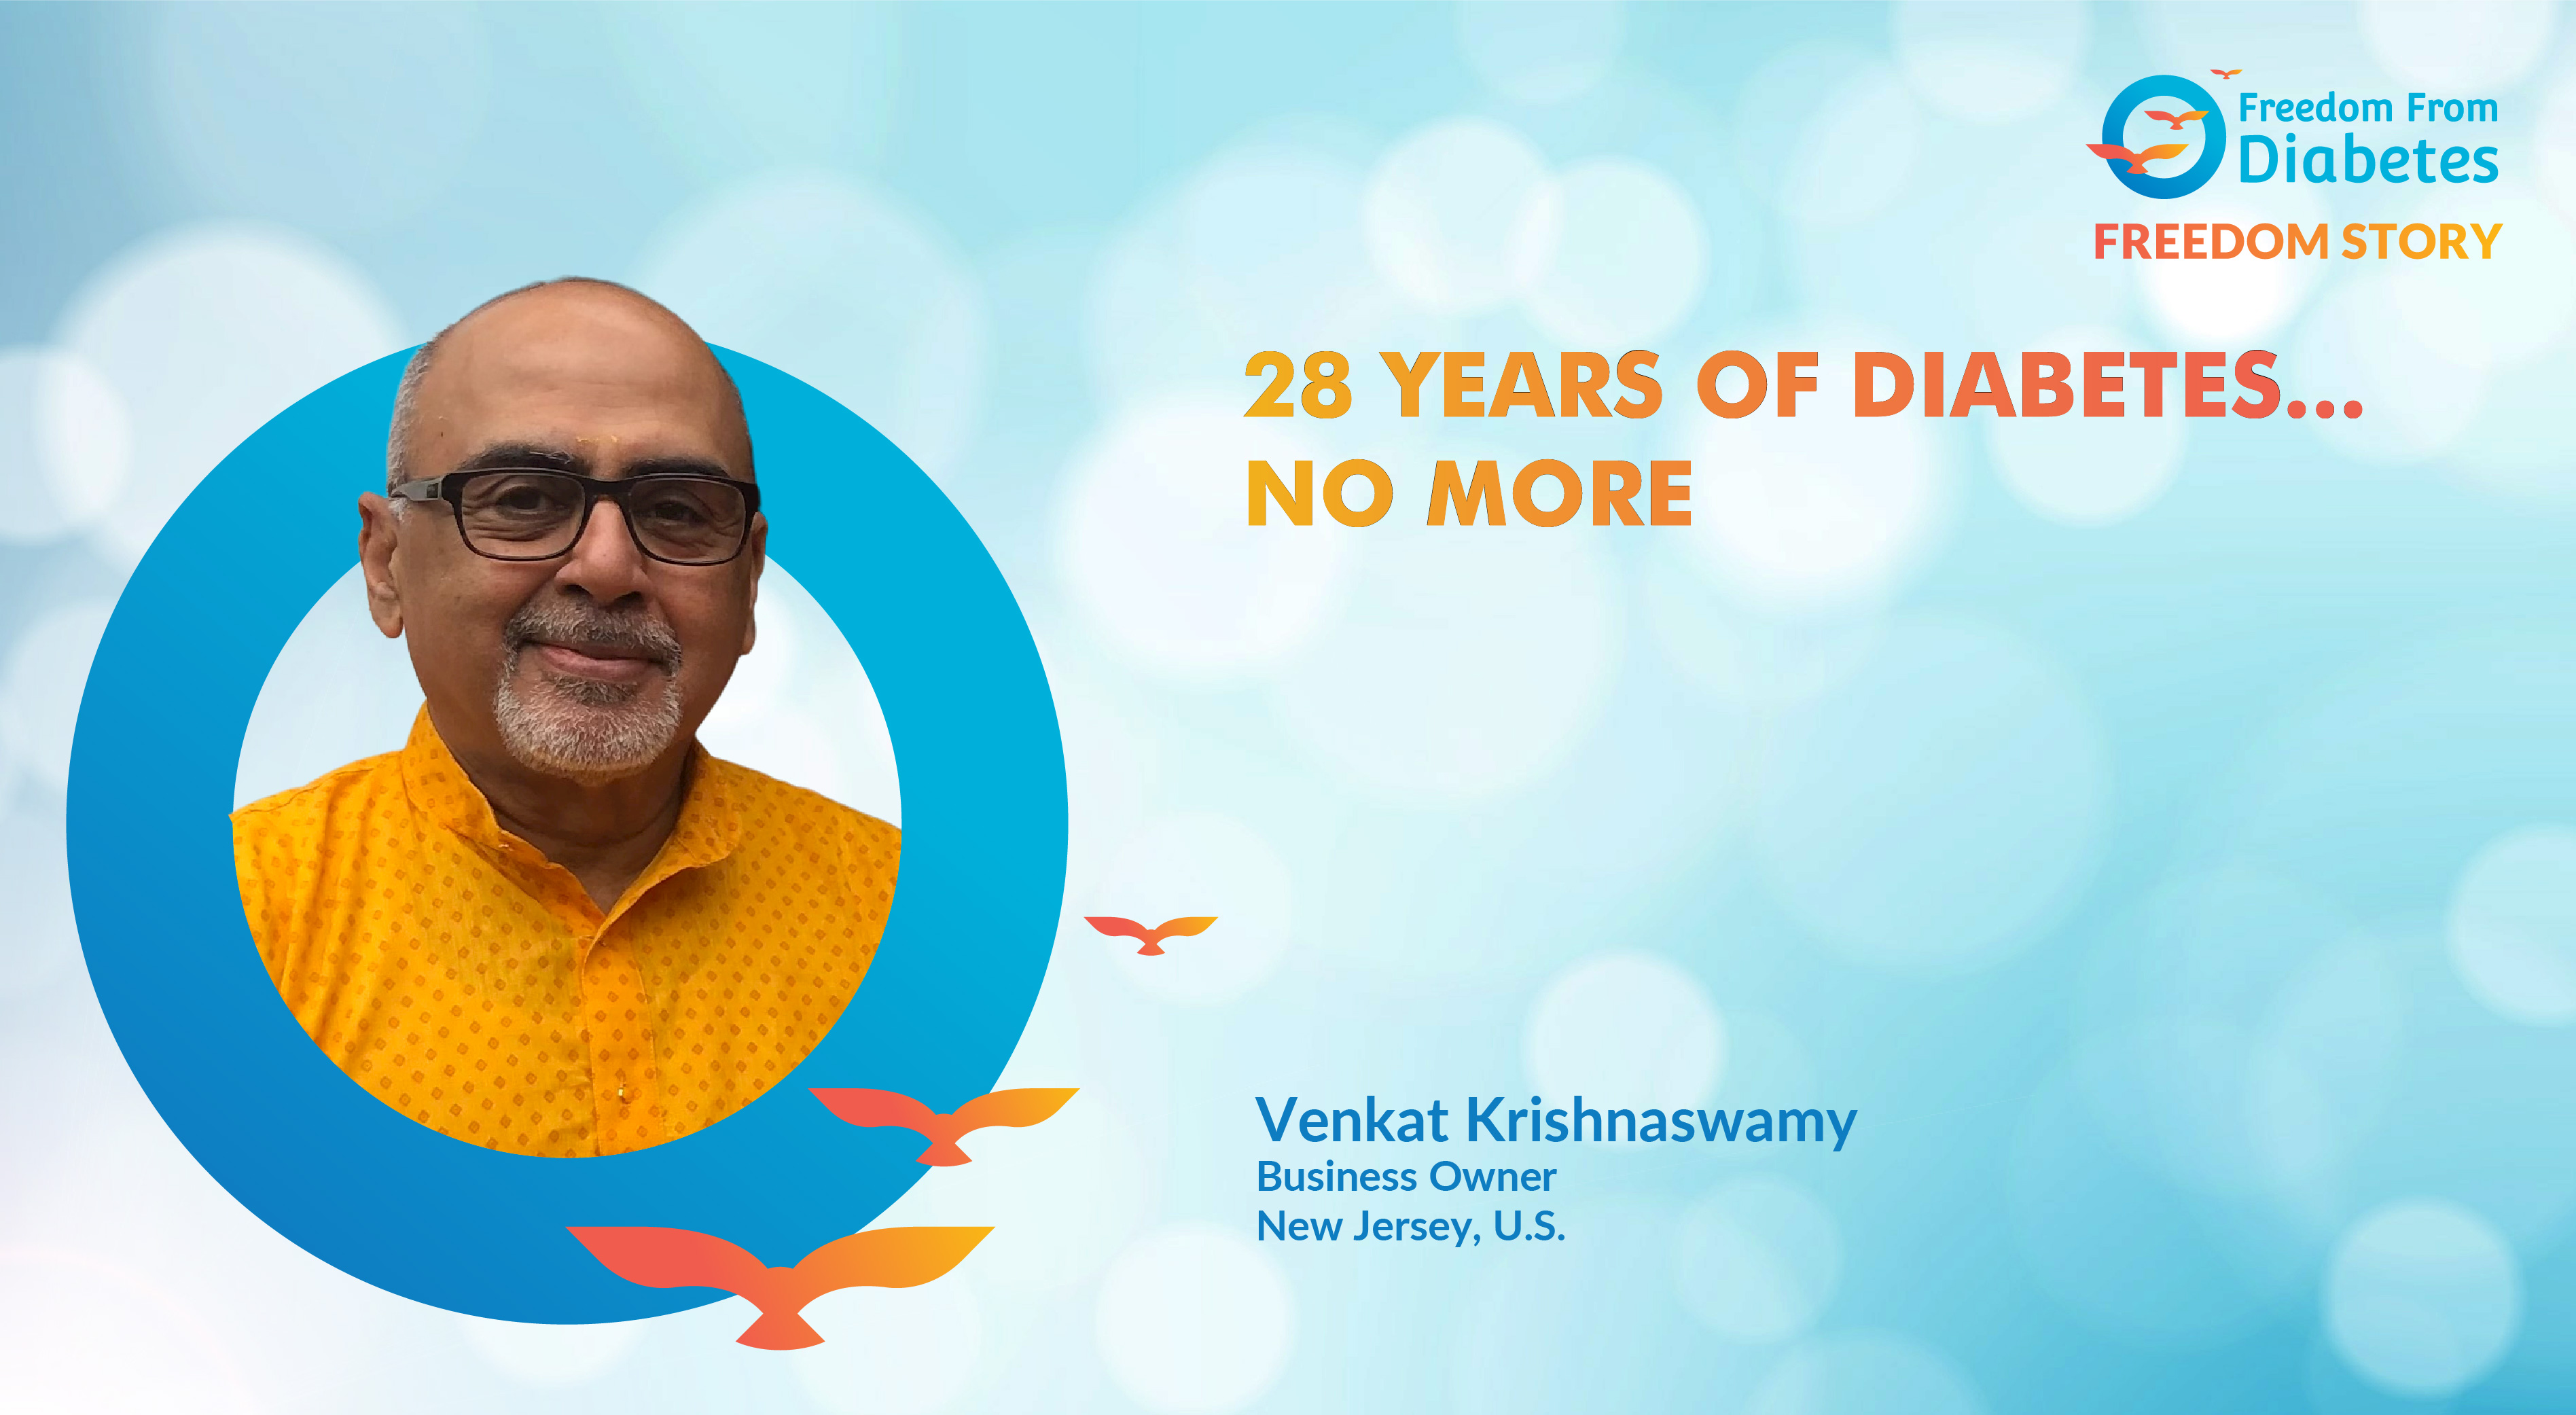 Venkat Krishnaswamy: 28 years of diabetes...gone in 12 days